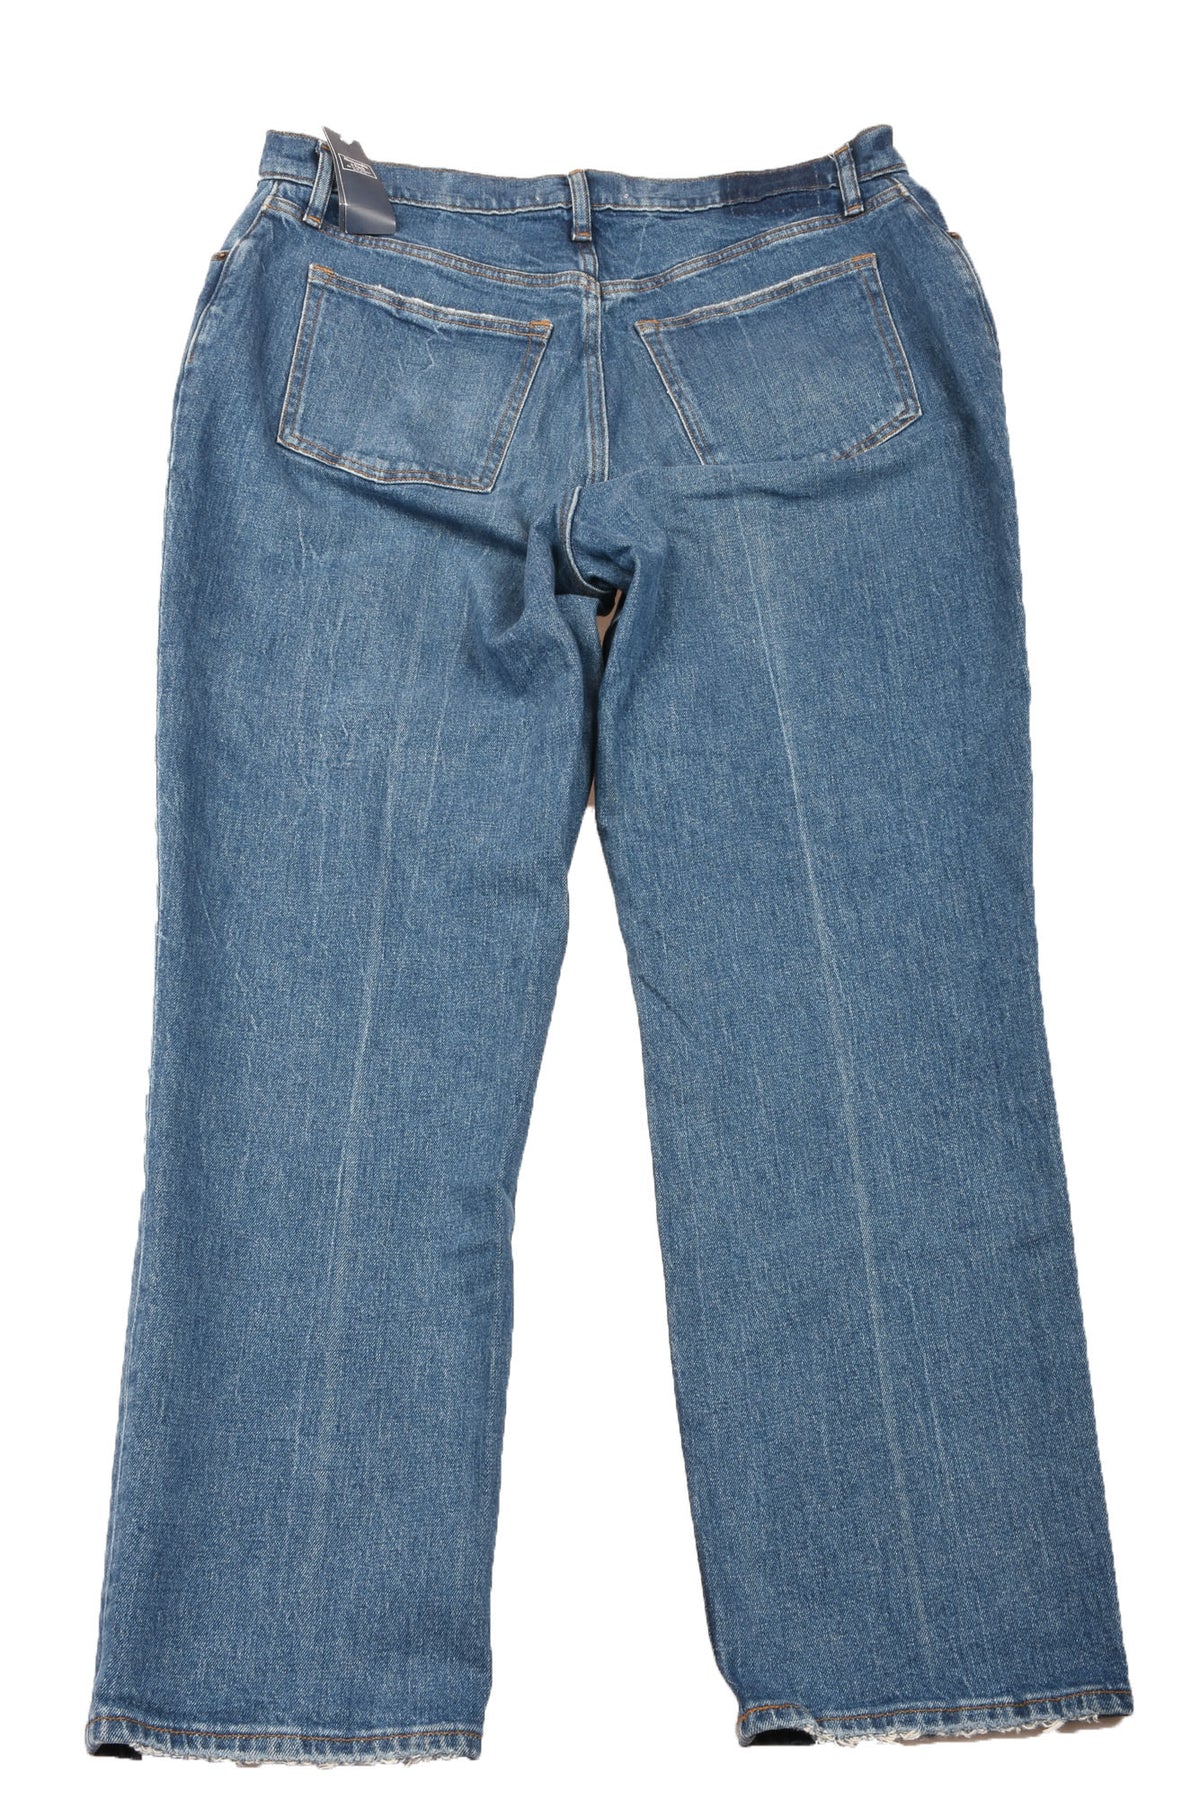 Abercrombie &amp; Fitch Size 33/16 Regular Women&#39;s Plus Jeans